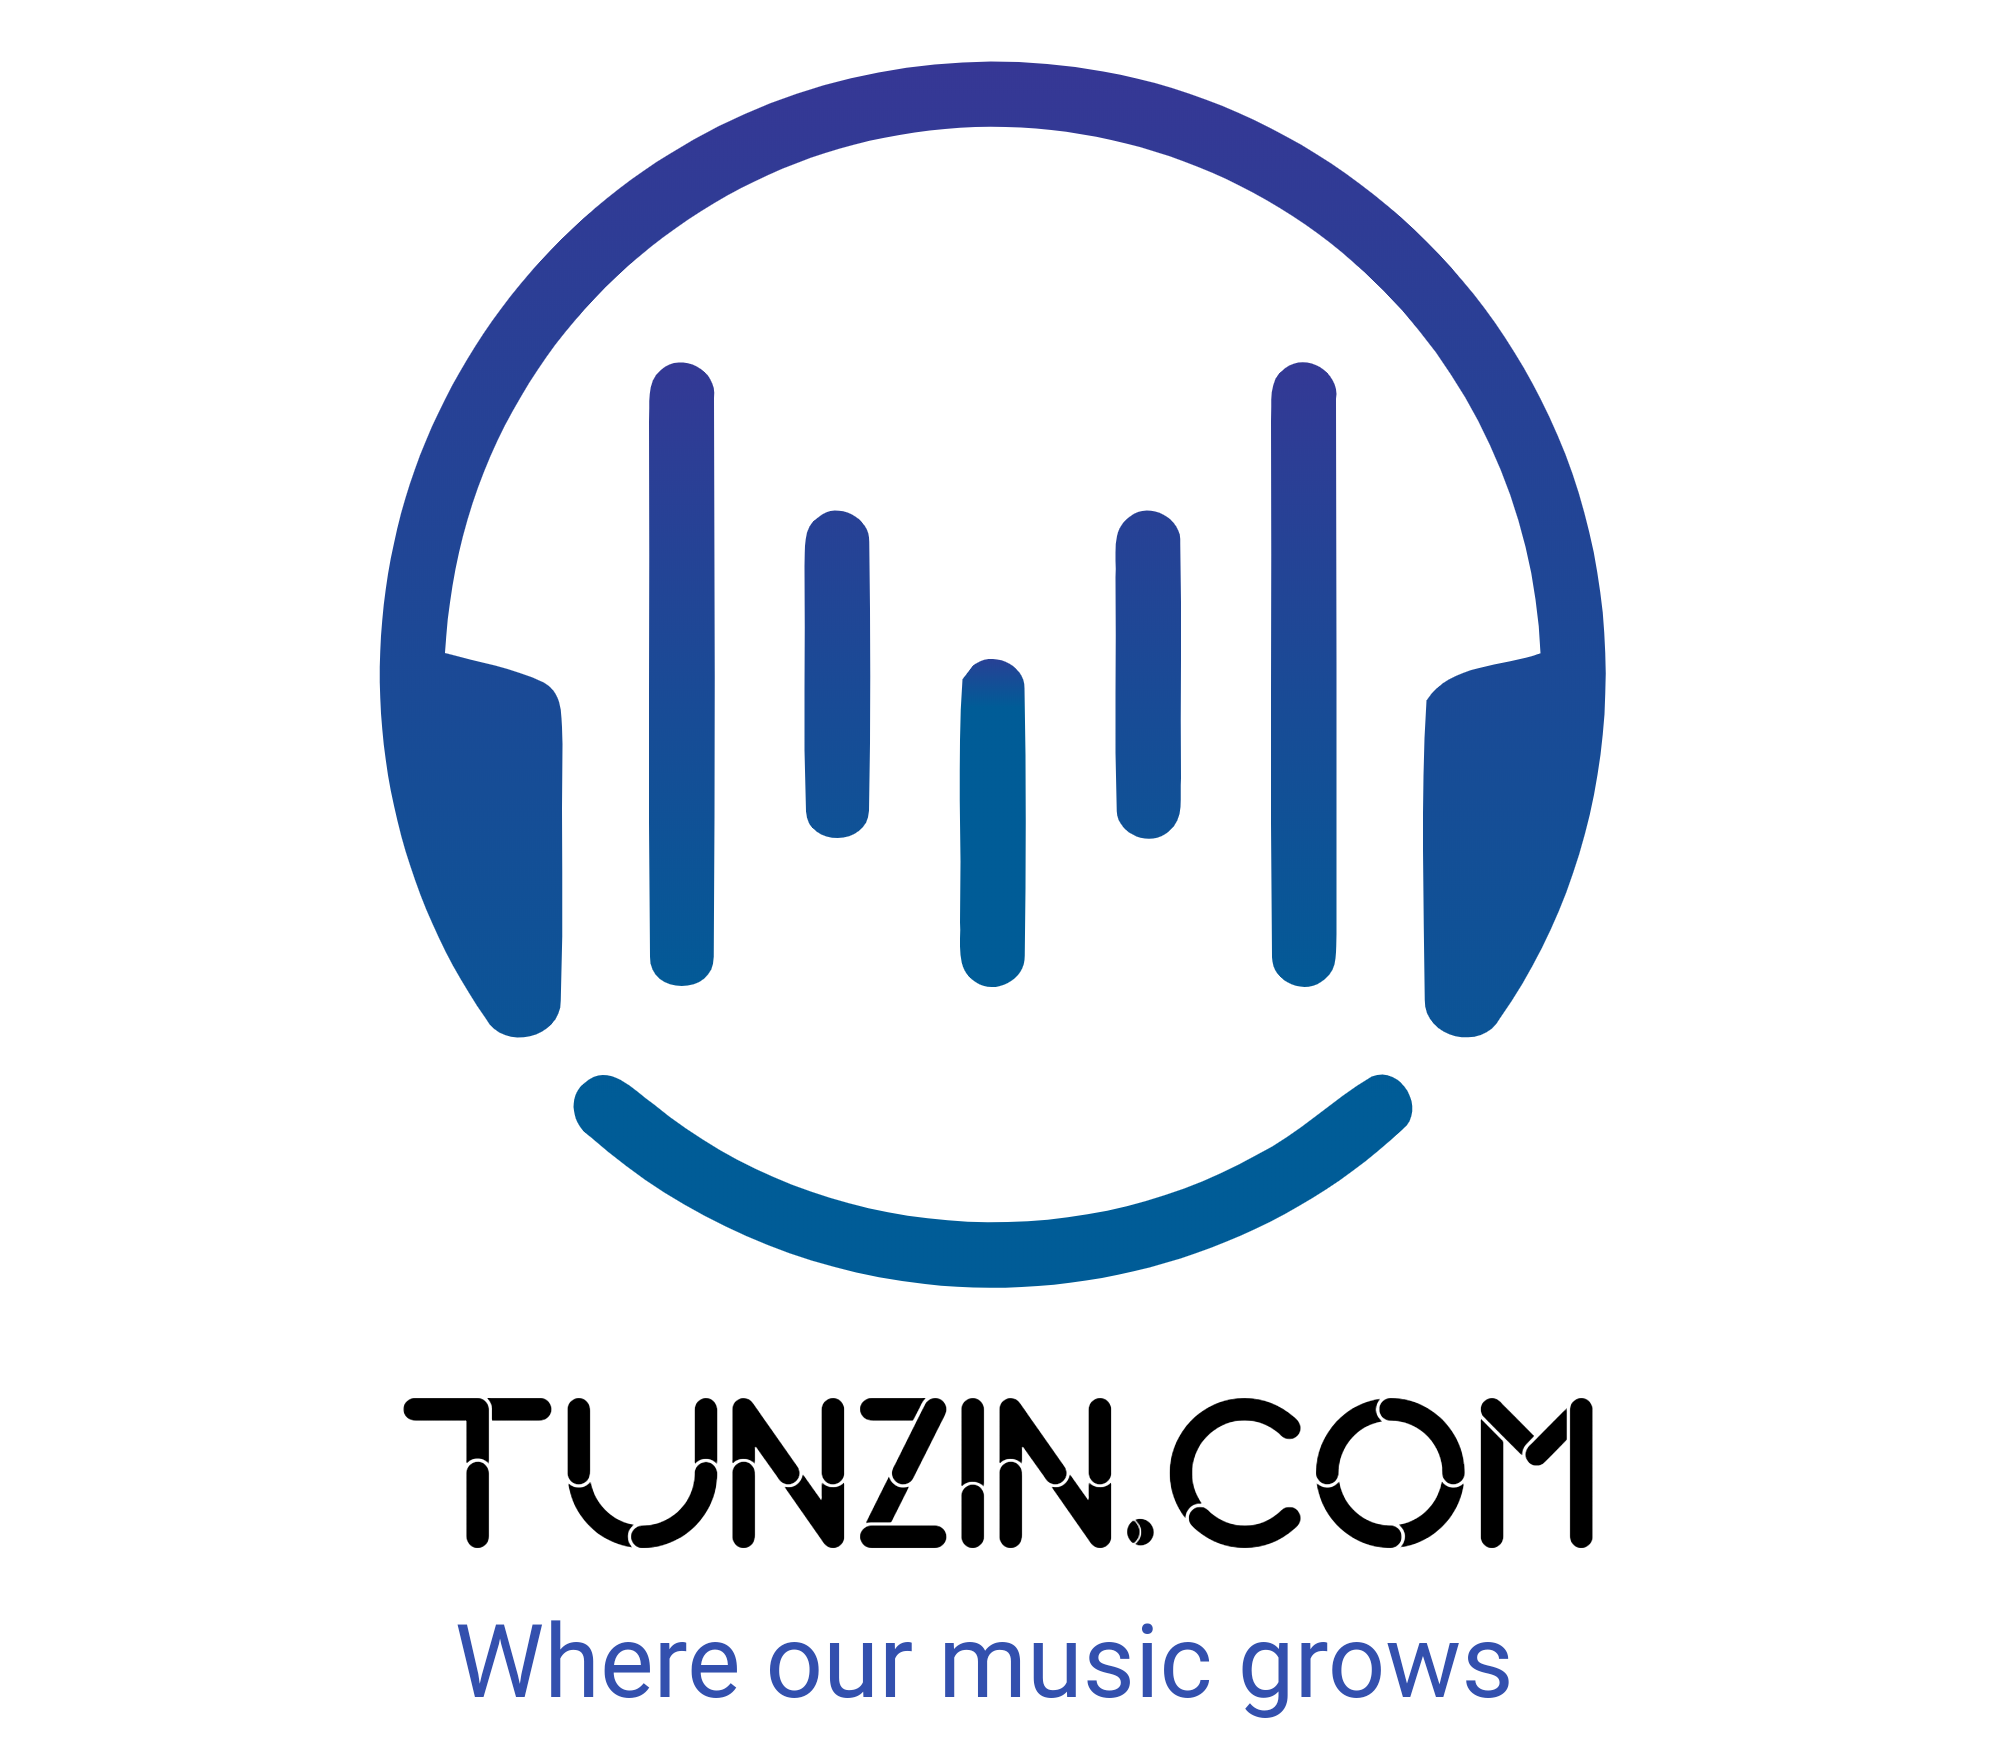 TUNZIN.COM